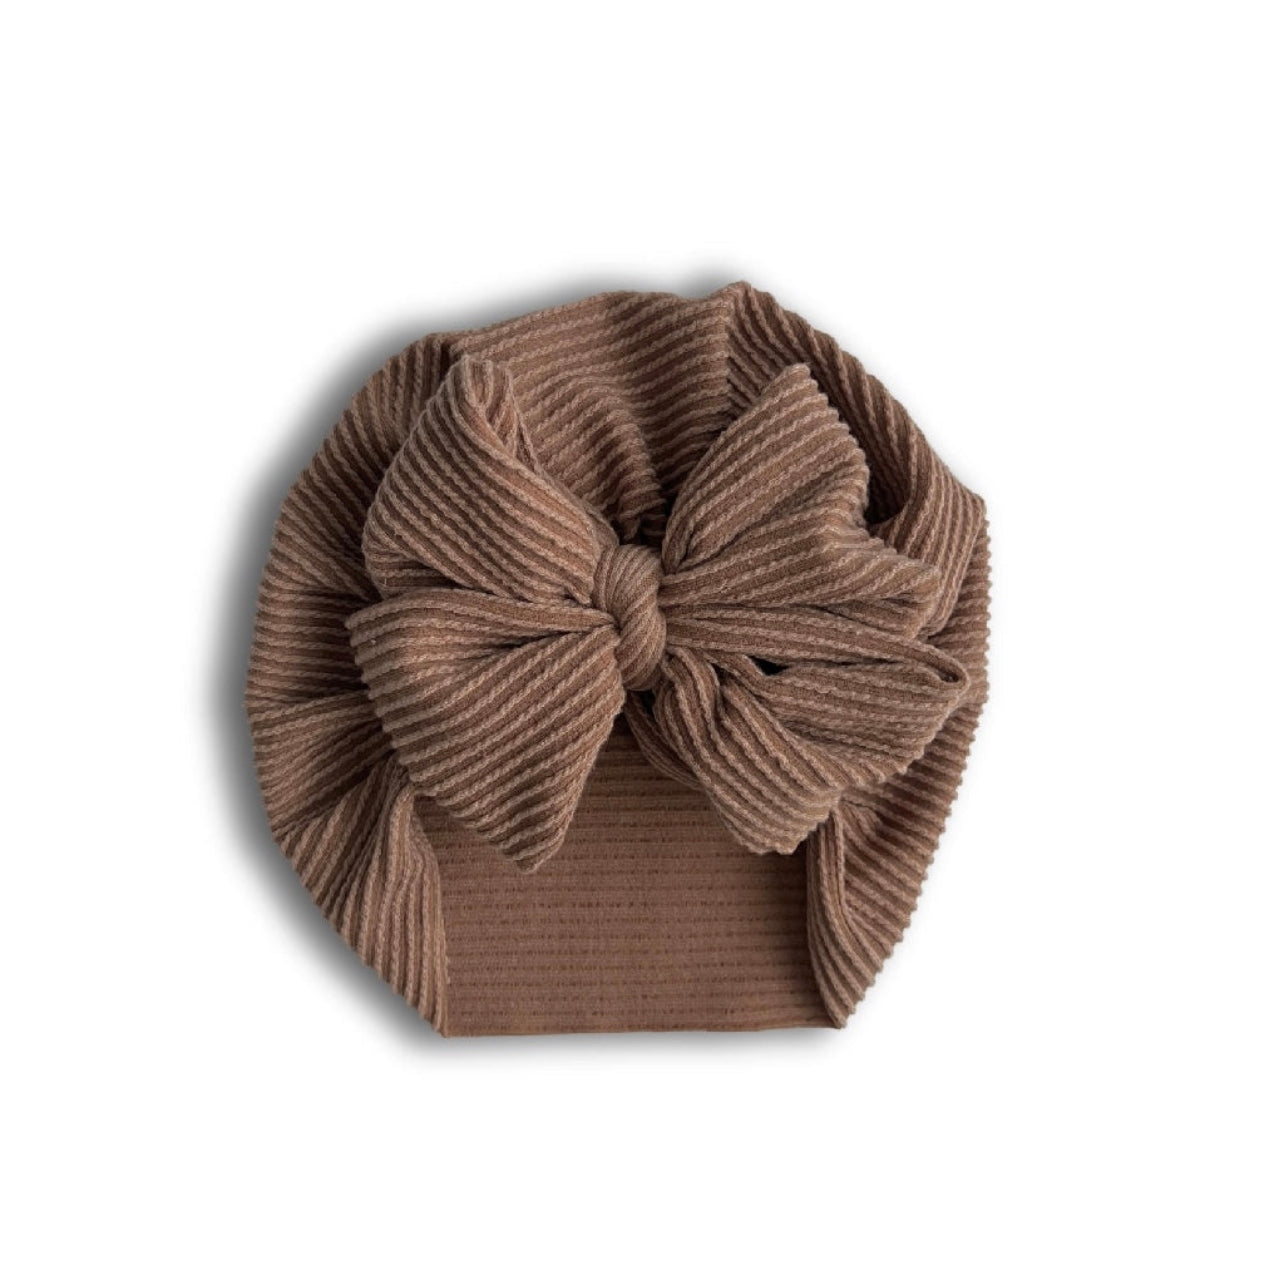 Sale! “Mama Bear” Messy Bow Headwrap/Turban